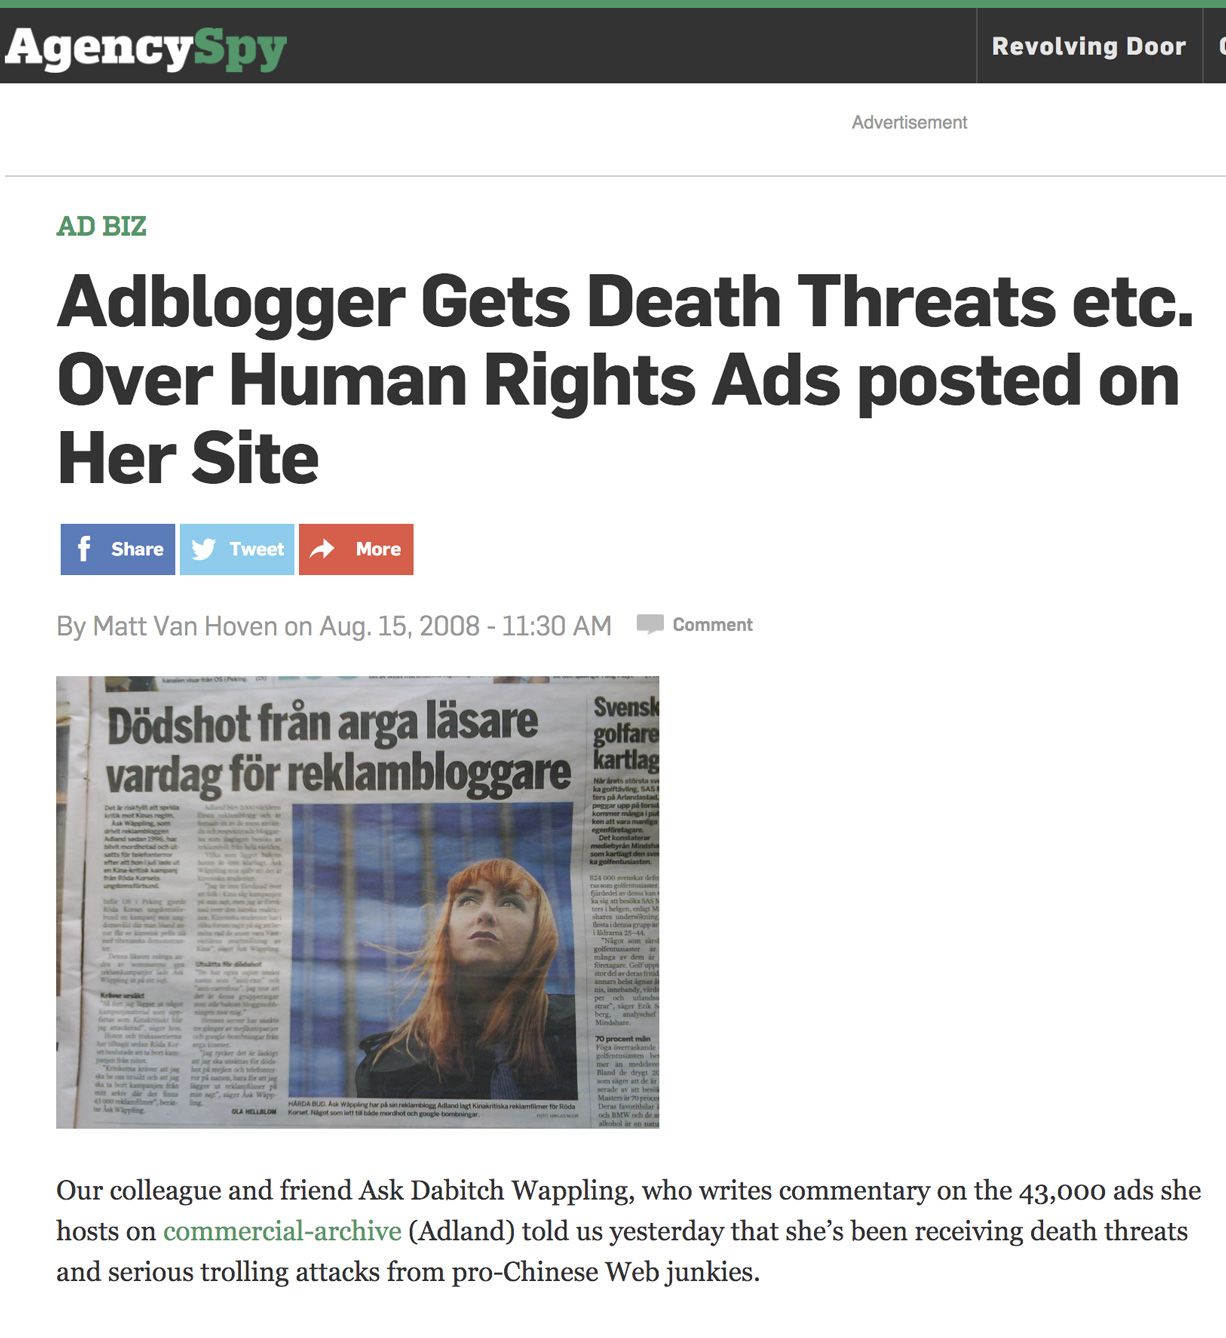 Agencyspy: Adblogger Gets Death Threats etc. Over Human Rights Ads 2008